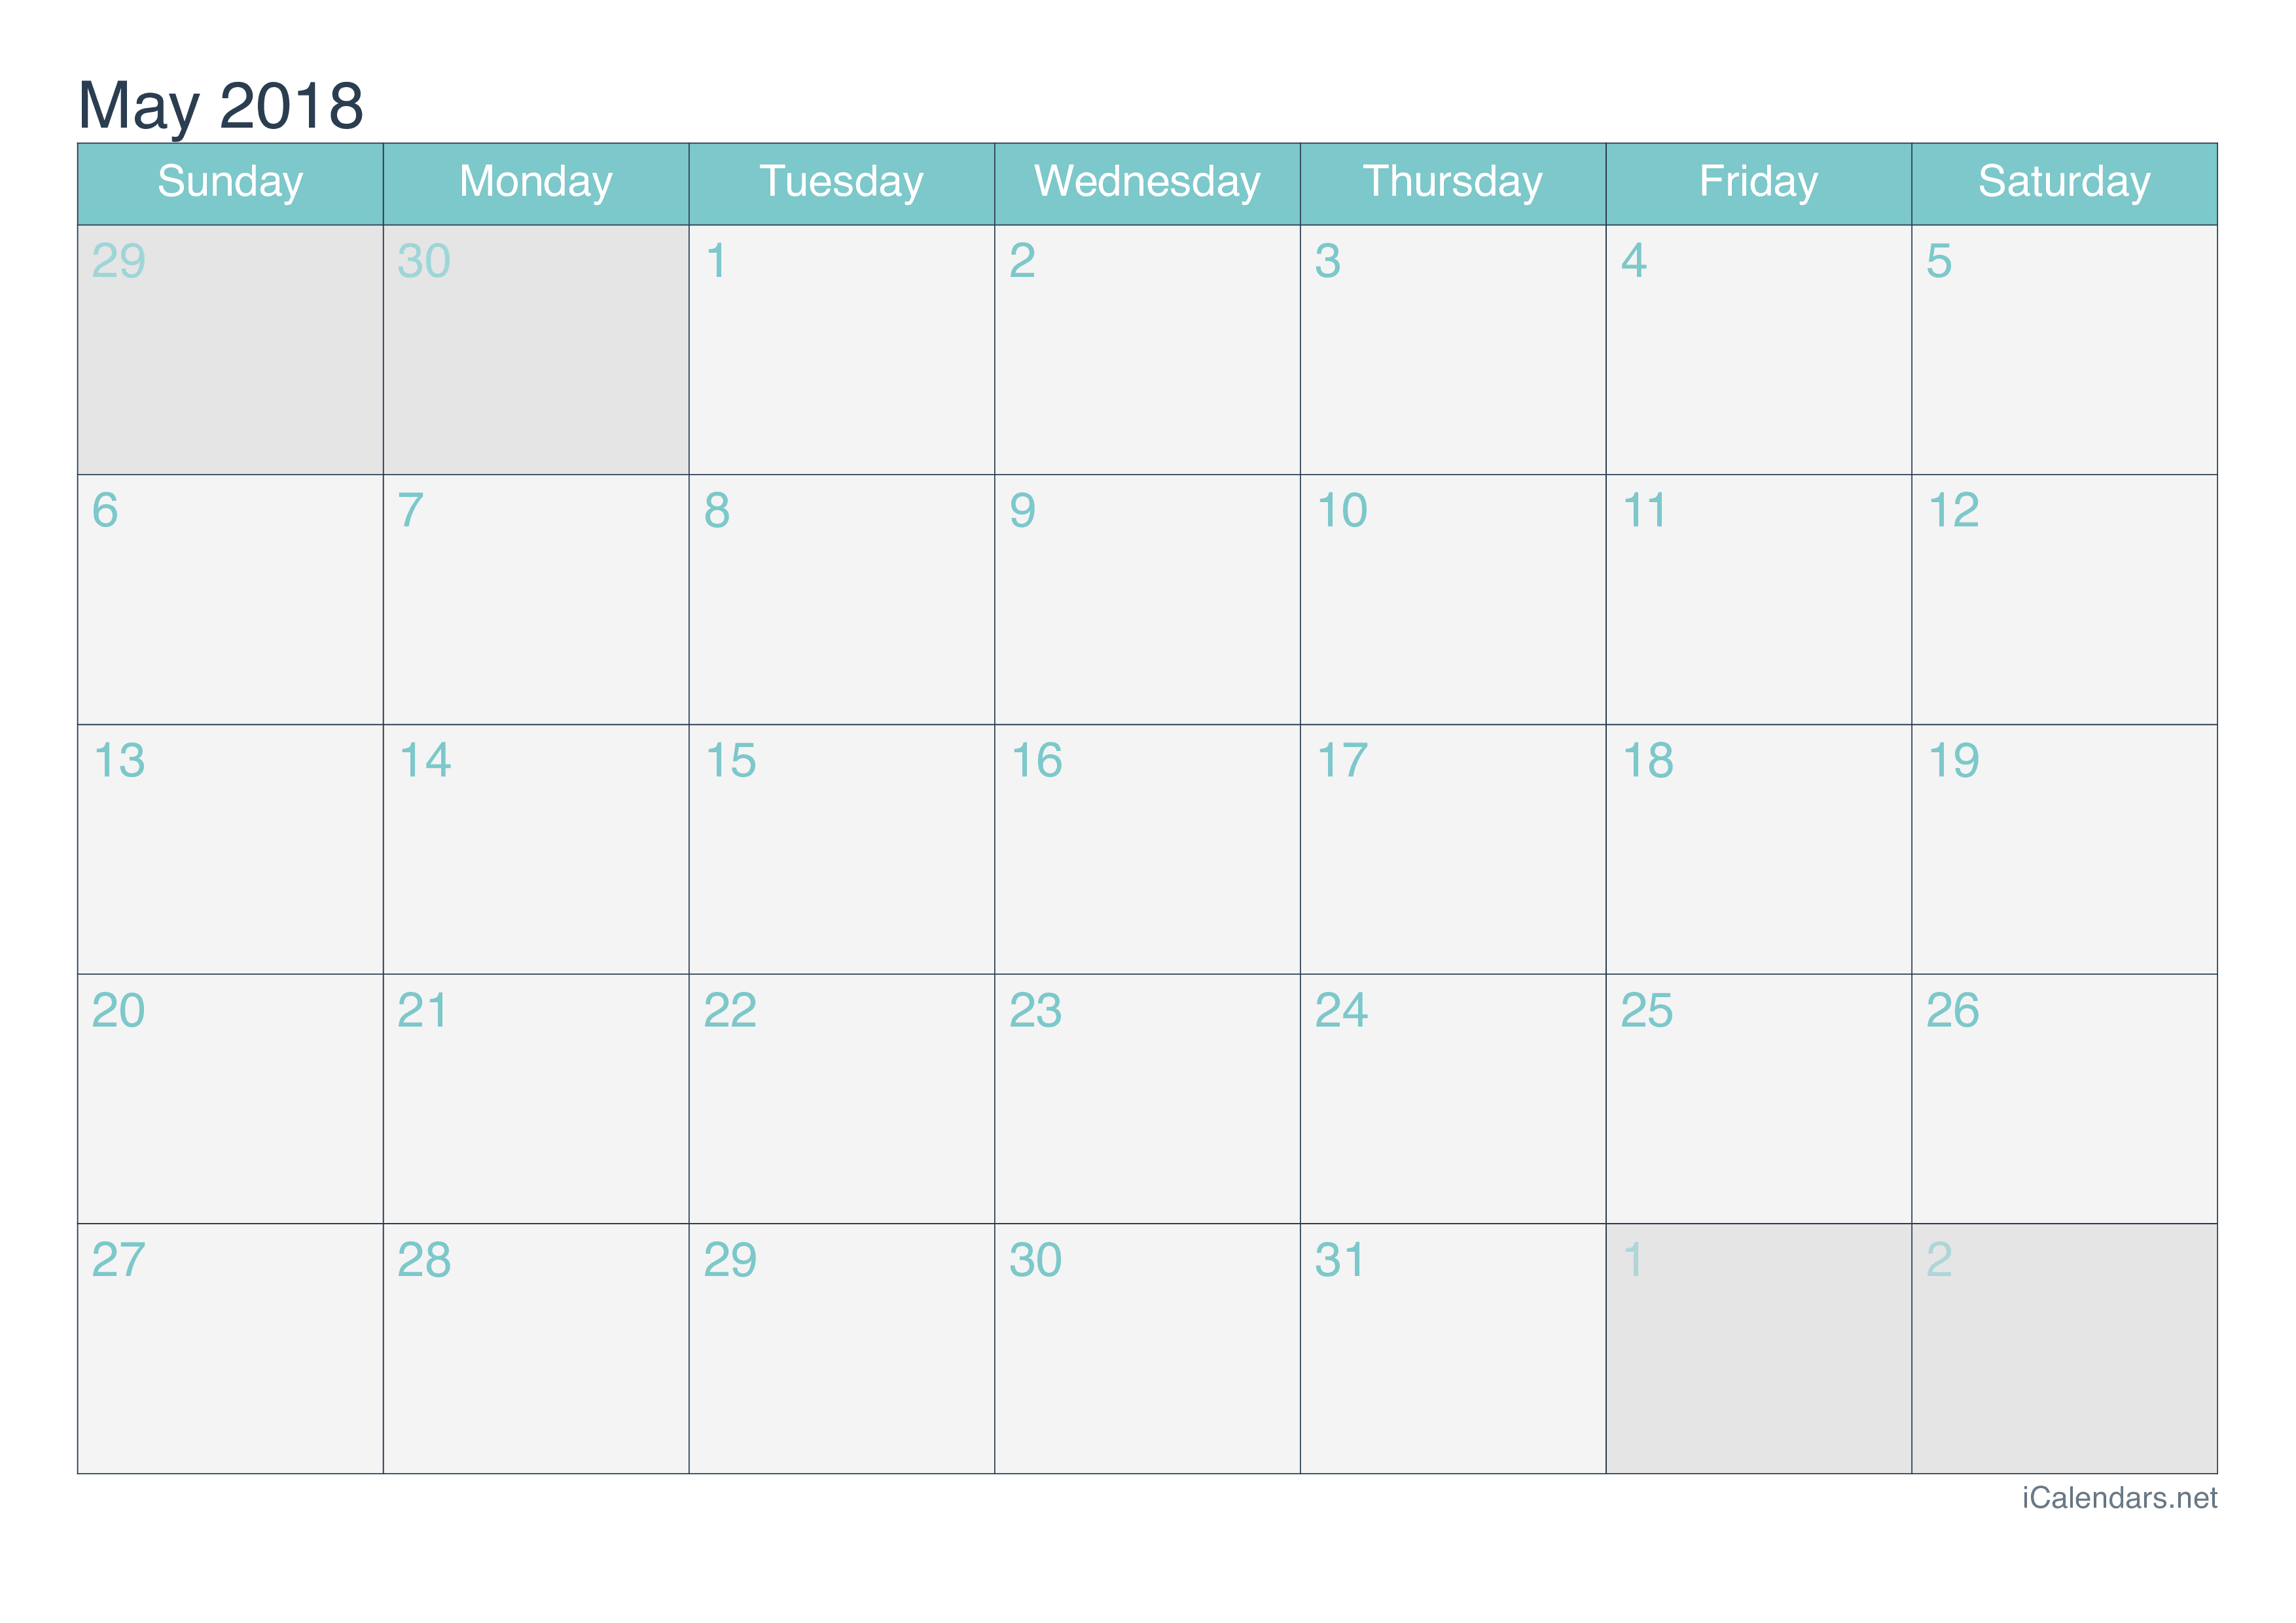 may-2018-calendar-free-printable-calendar-templates